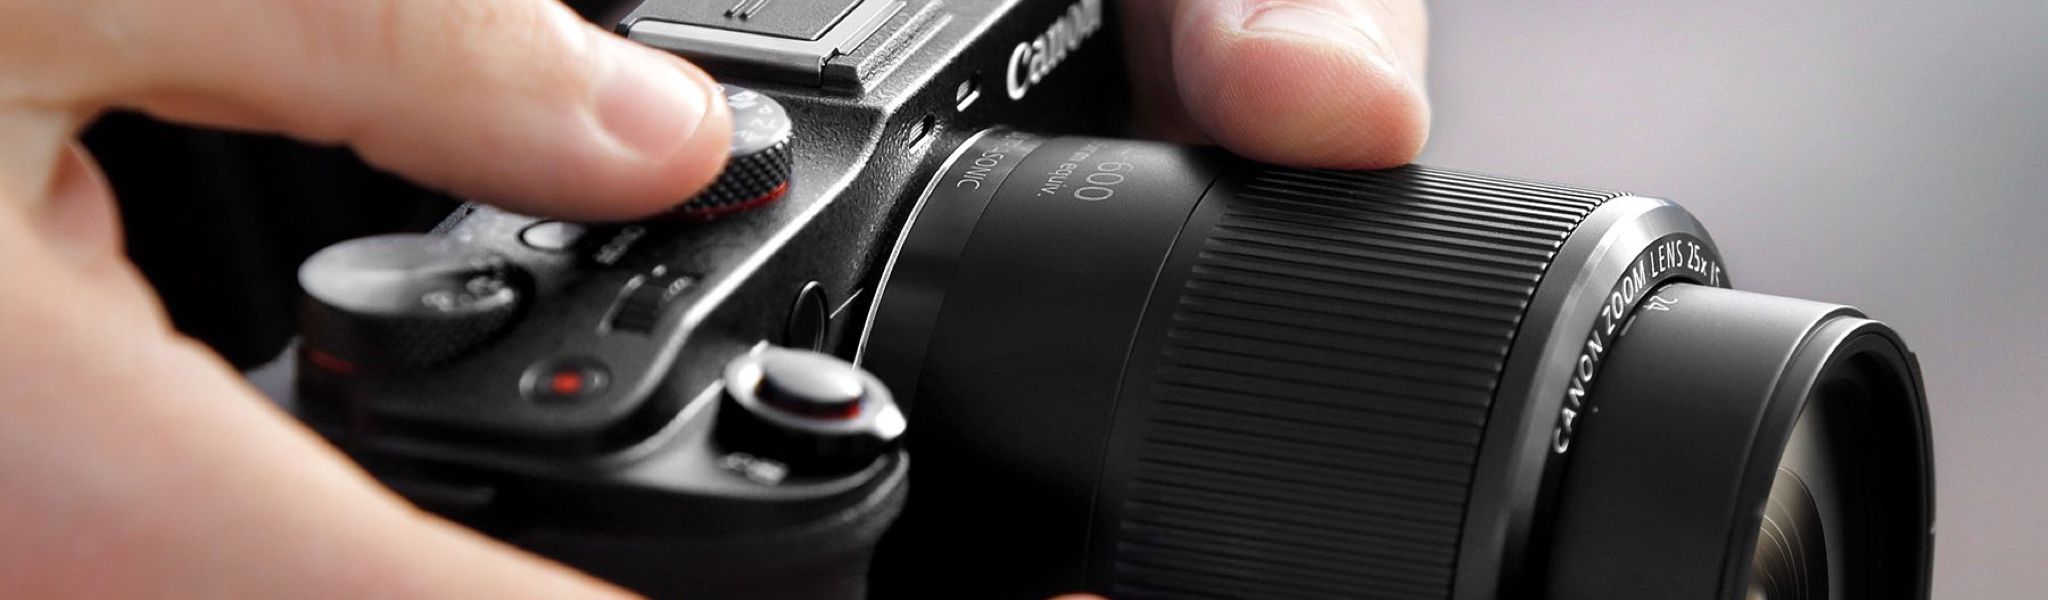 mate koppel bon Buying a Camera | Camera Types | Lens Types | John Lewis & Partners